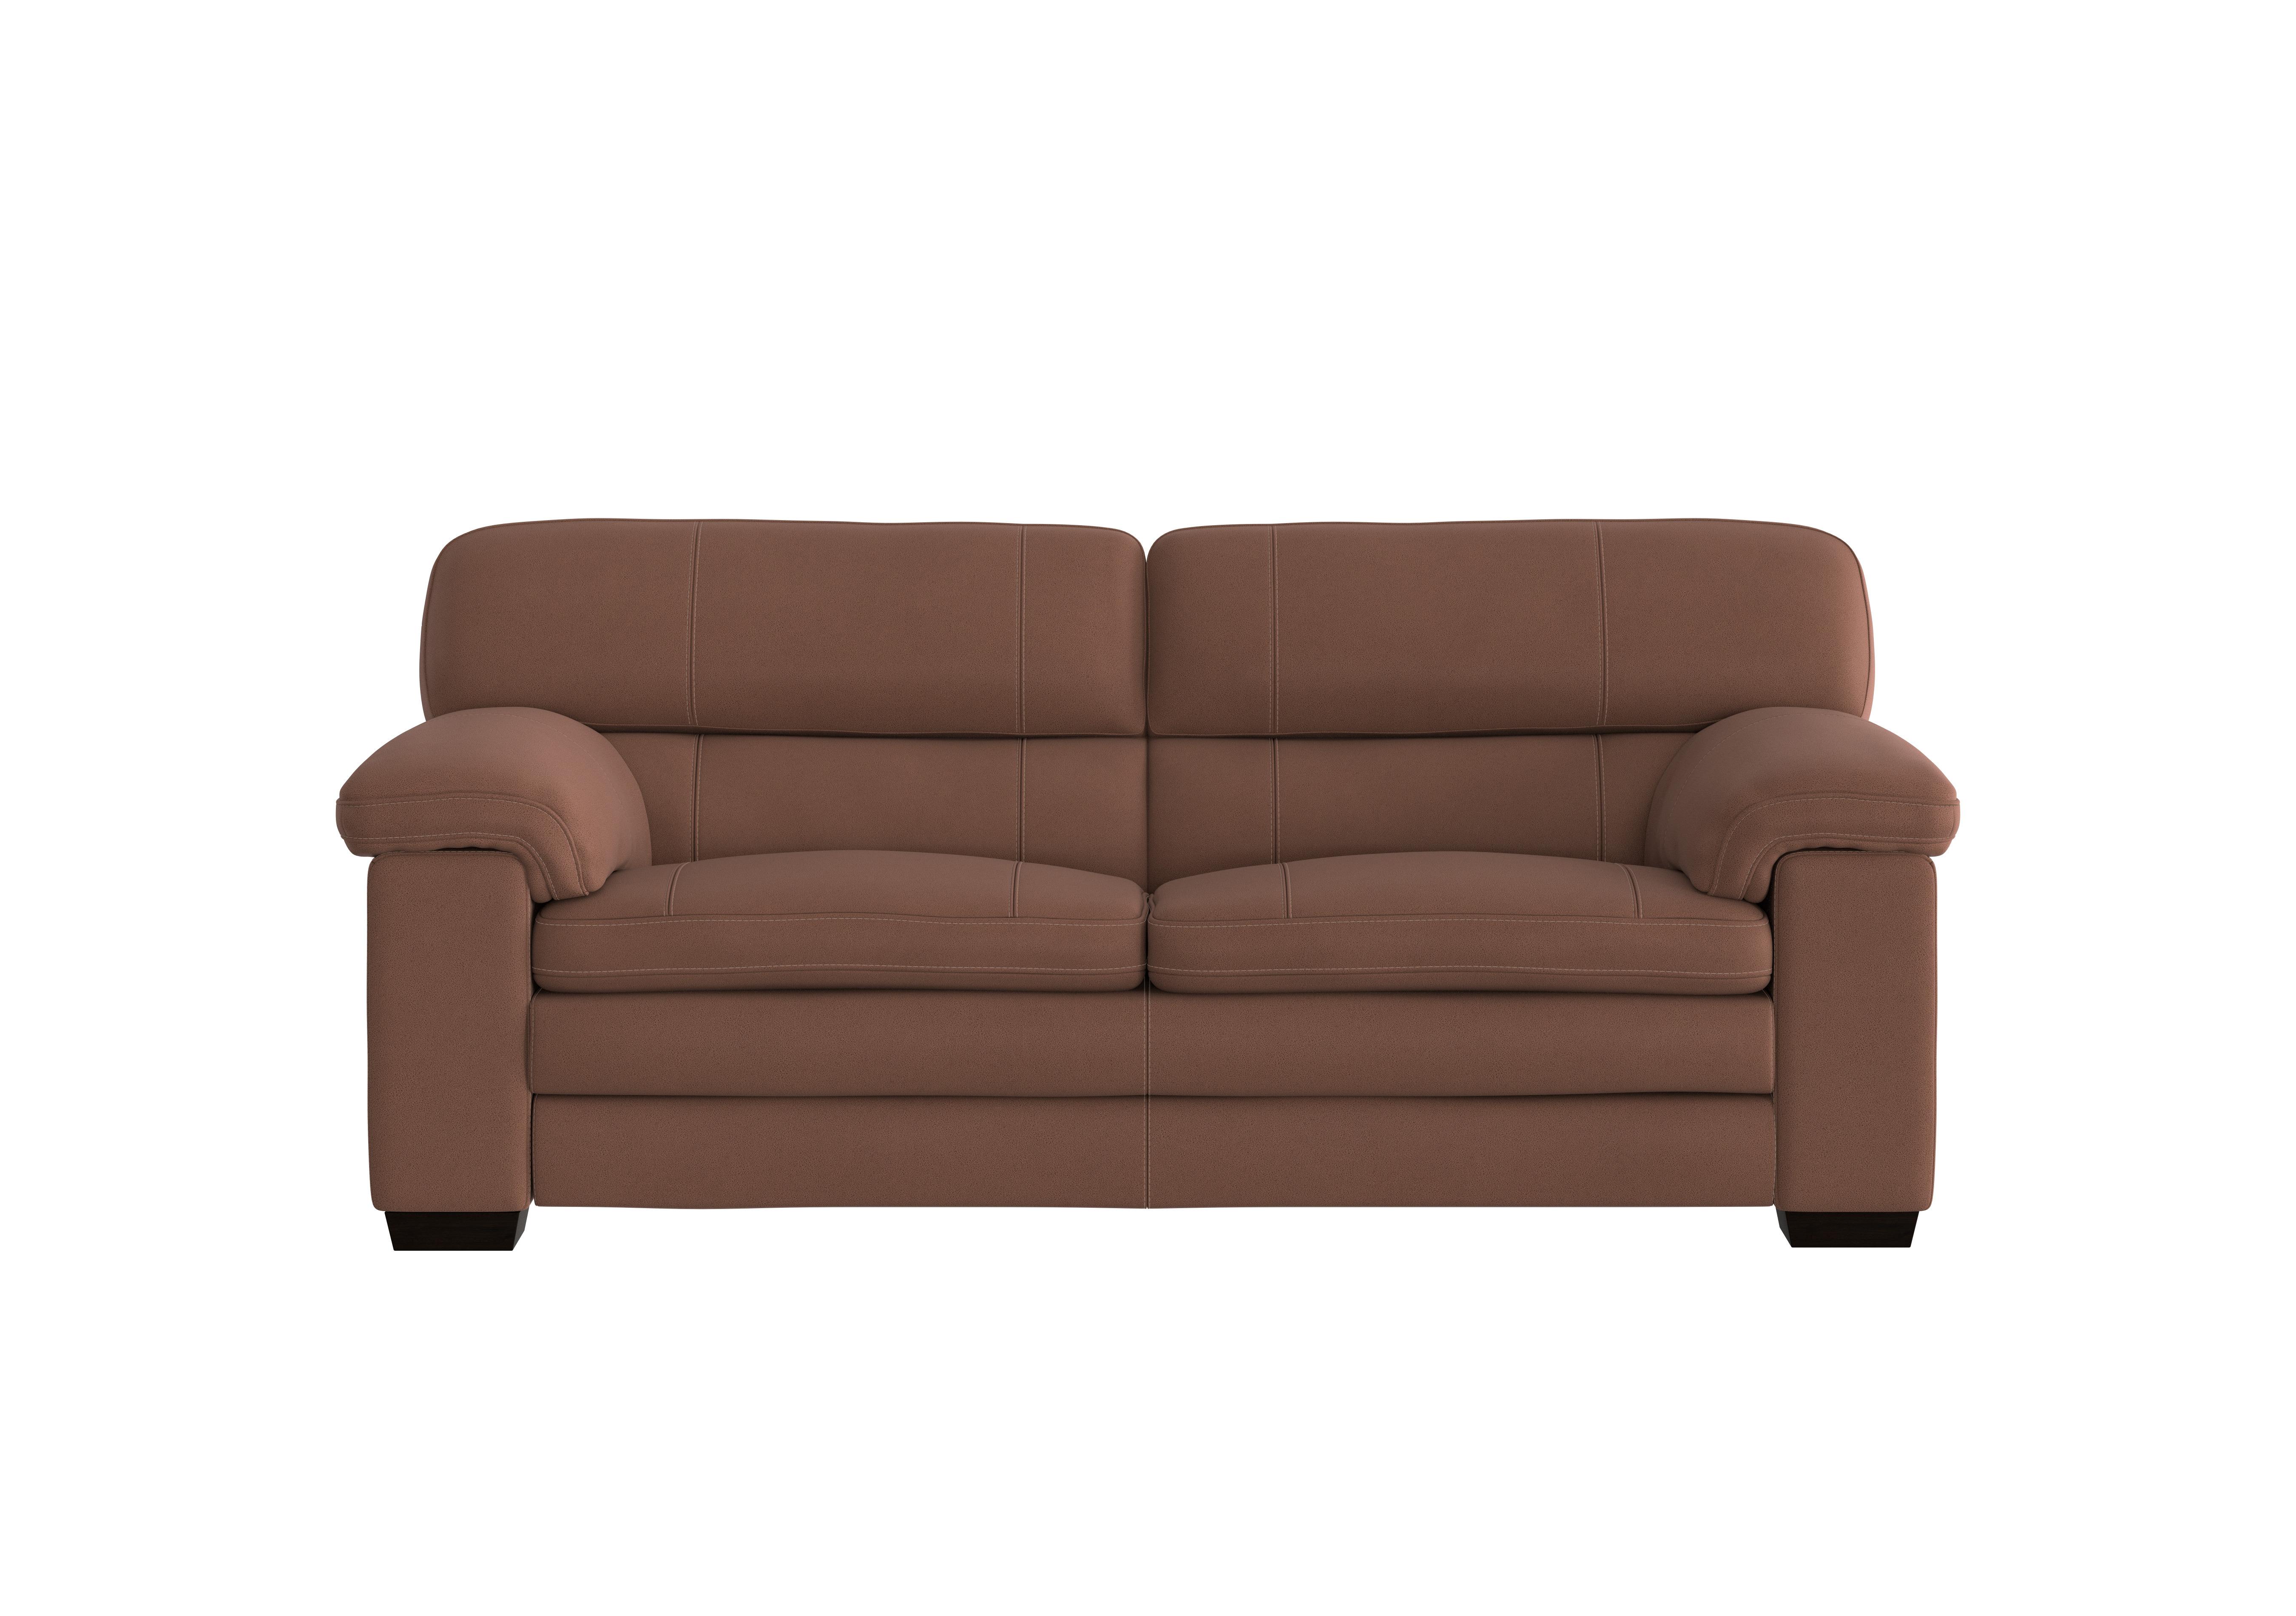 Cozee Fabric 2 Seater Sofa in Bfa-Blj-R05 Hazelnut on Furniture Village